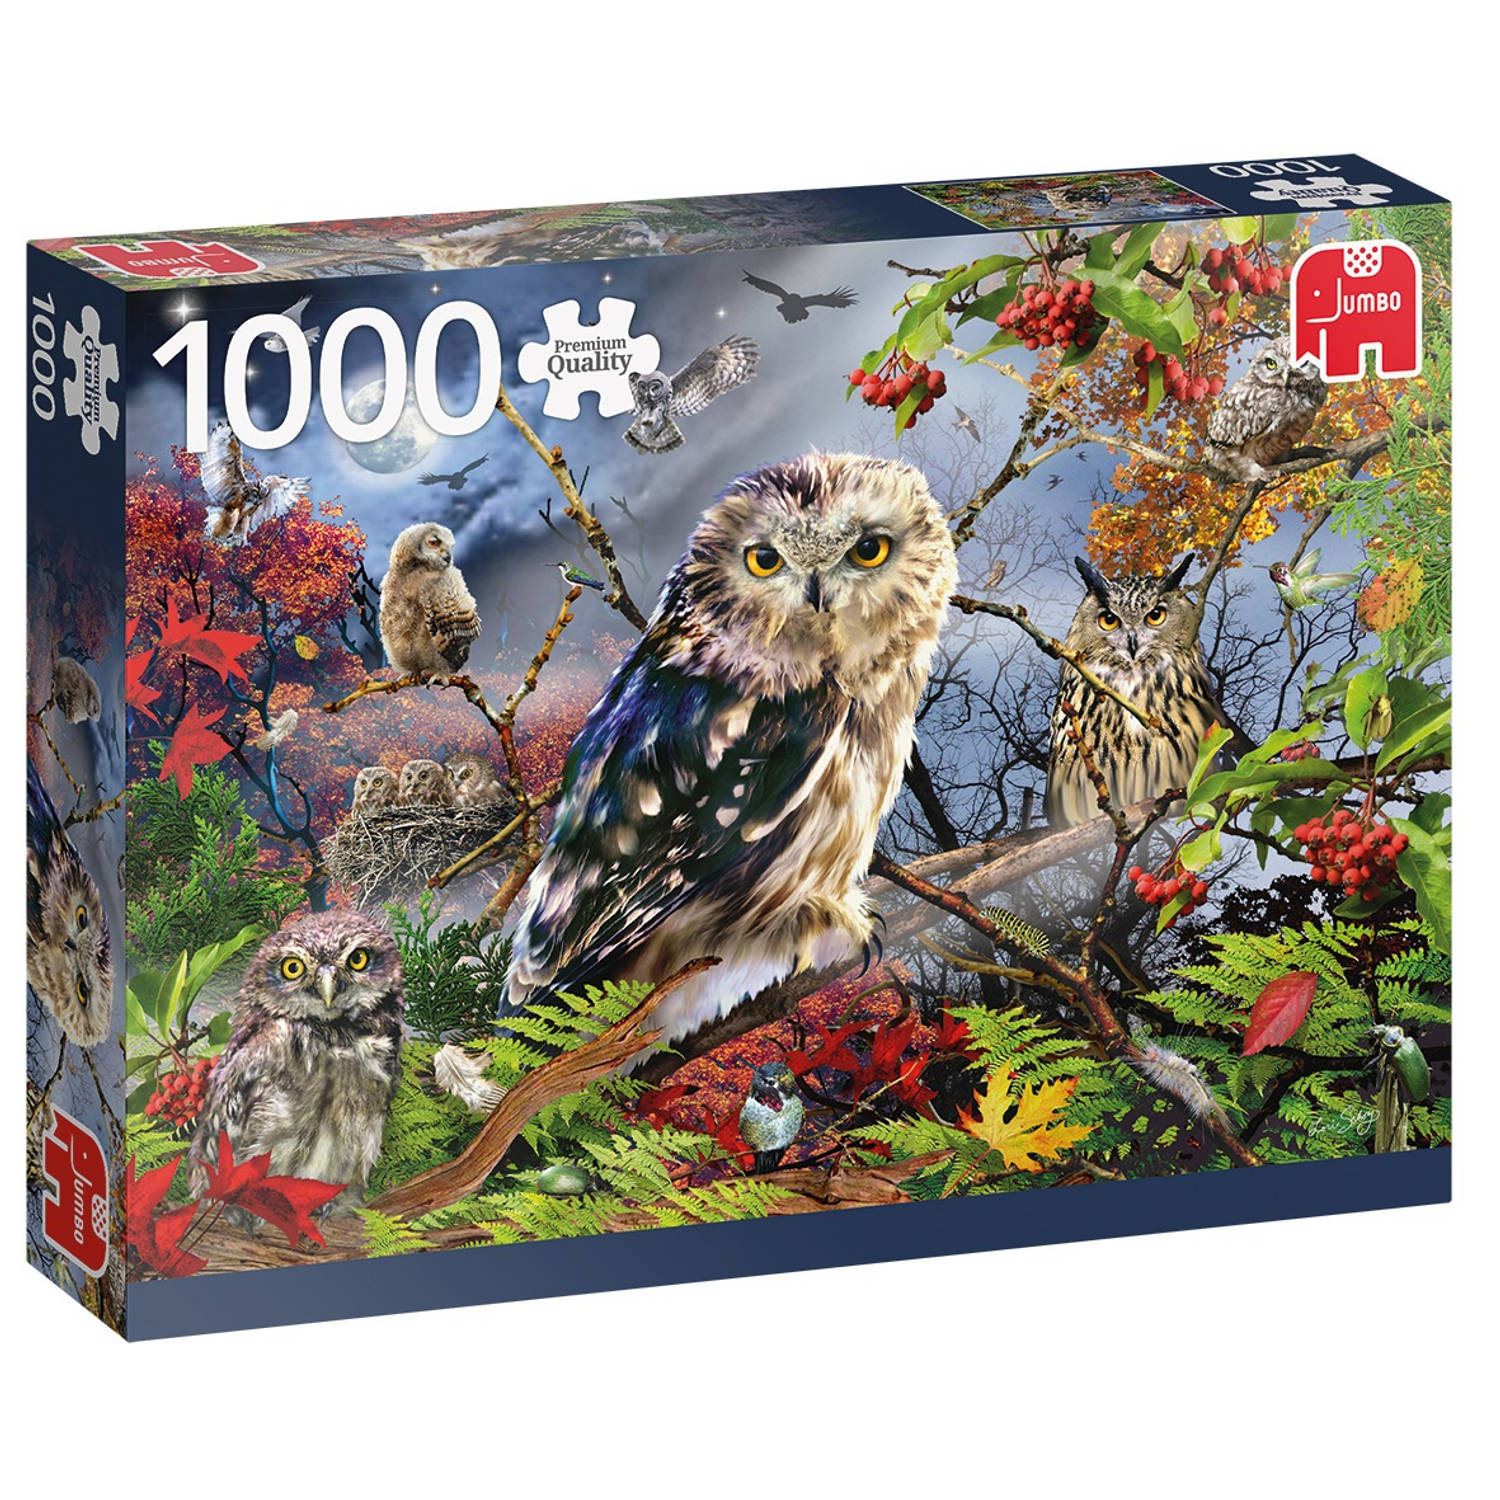 Jumbo Premium Collection Puzzel Owls in the Moonlight - Legpuzzel - 1000 stukjes